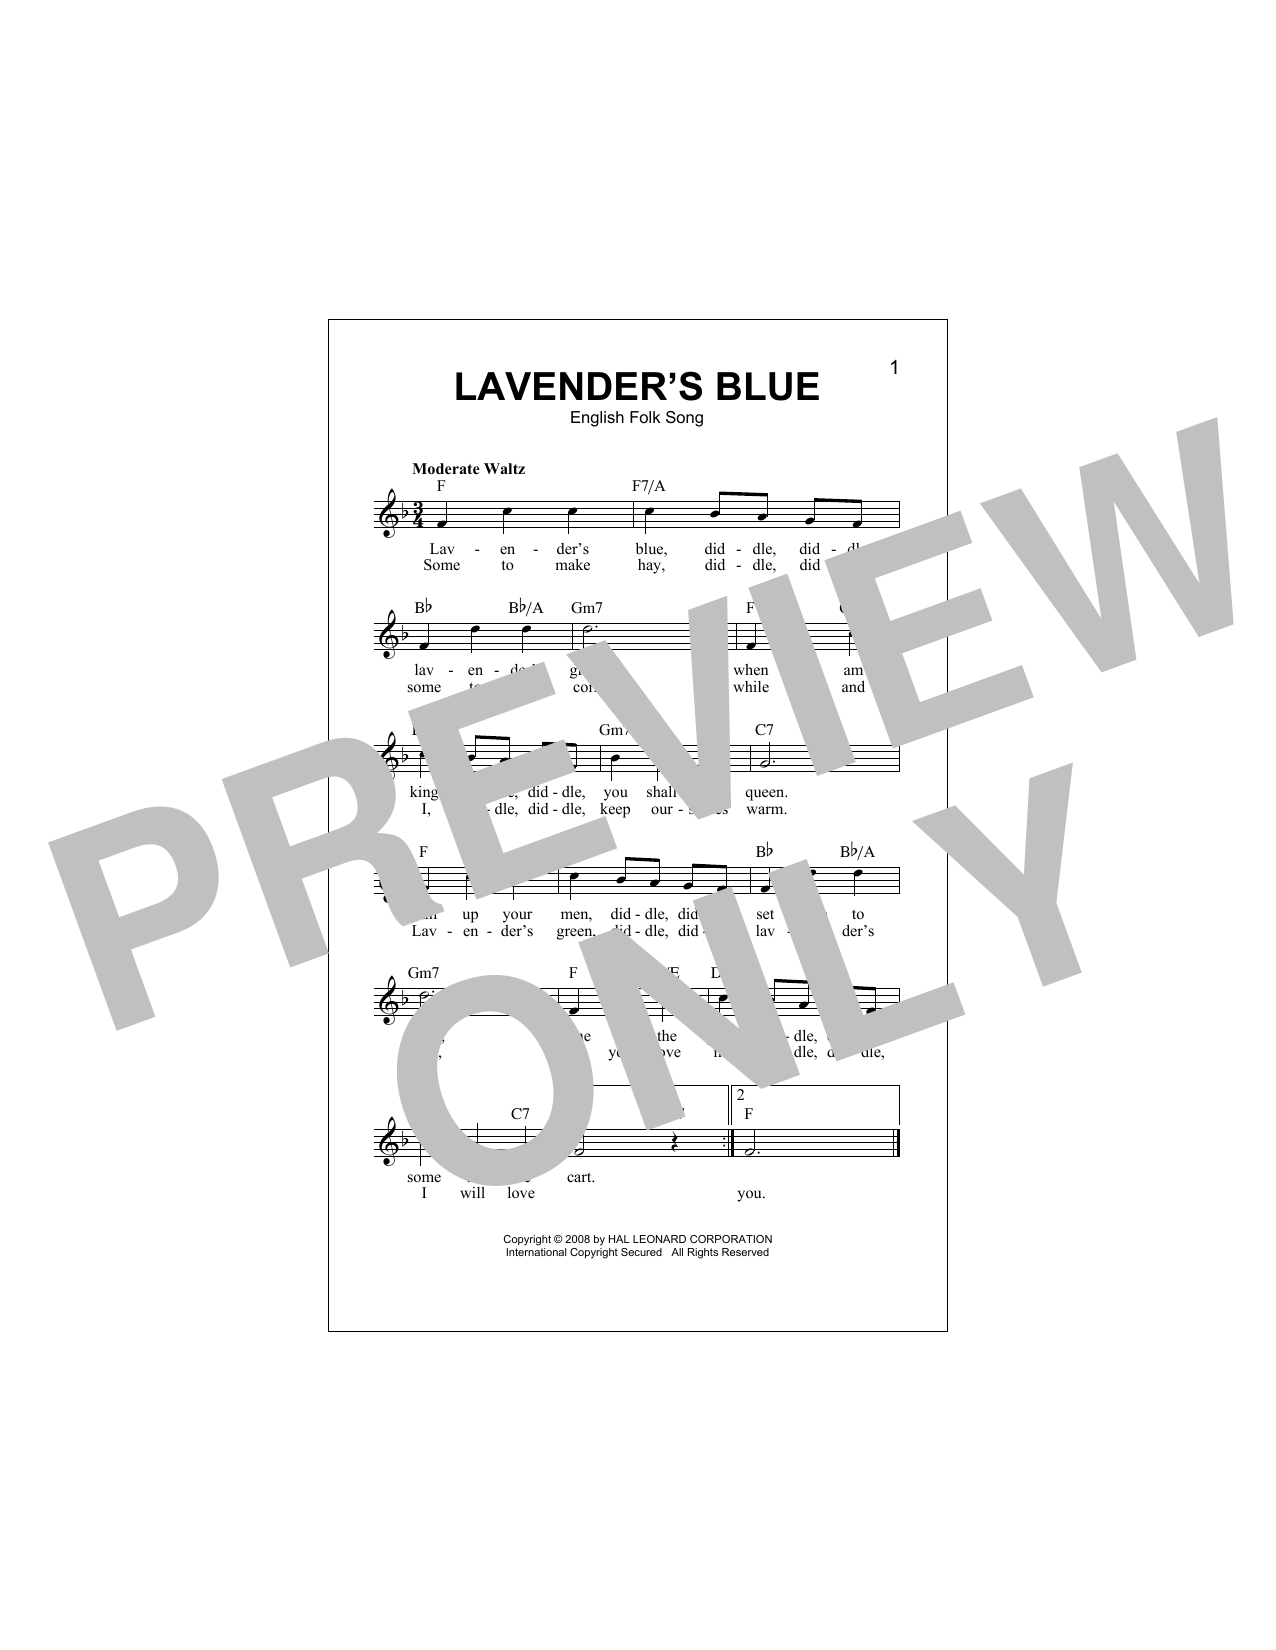 English Folk Song Lavender's Blue Sheet Music Notes & Chords for Ukulele - Download or Print PDF